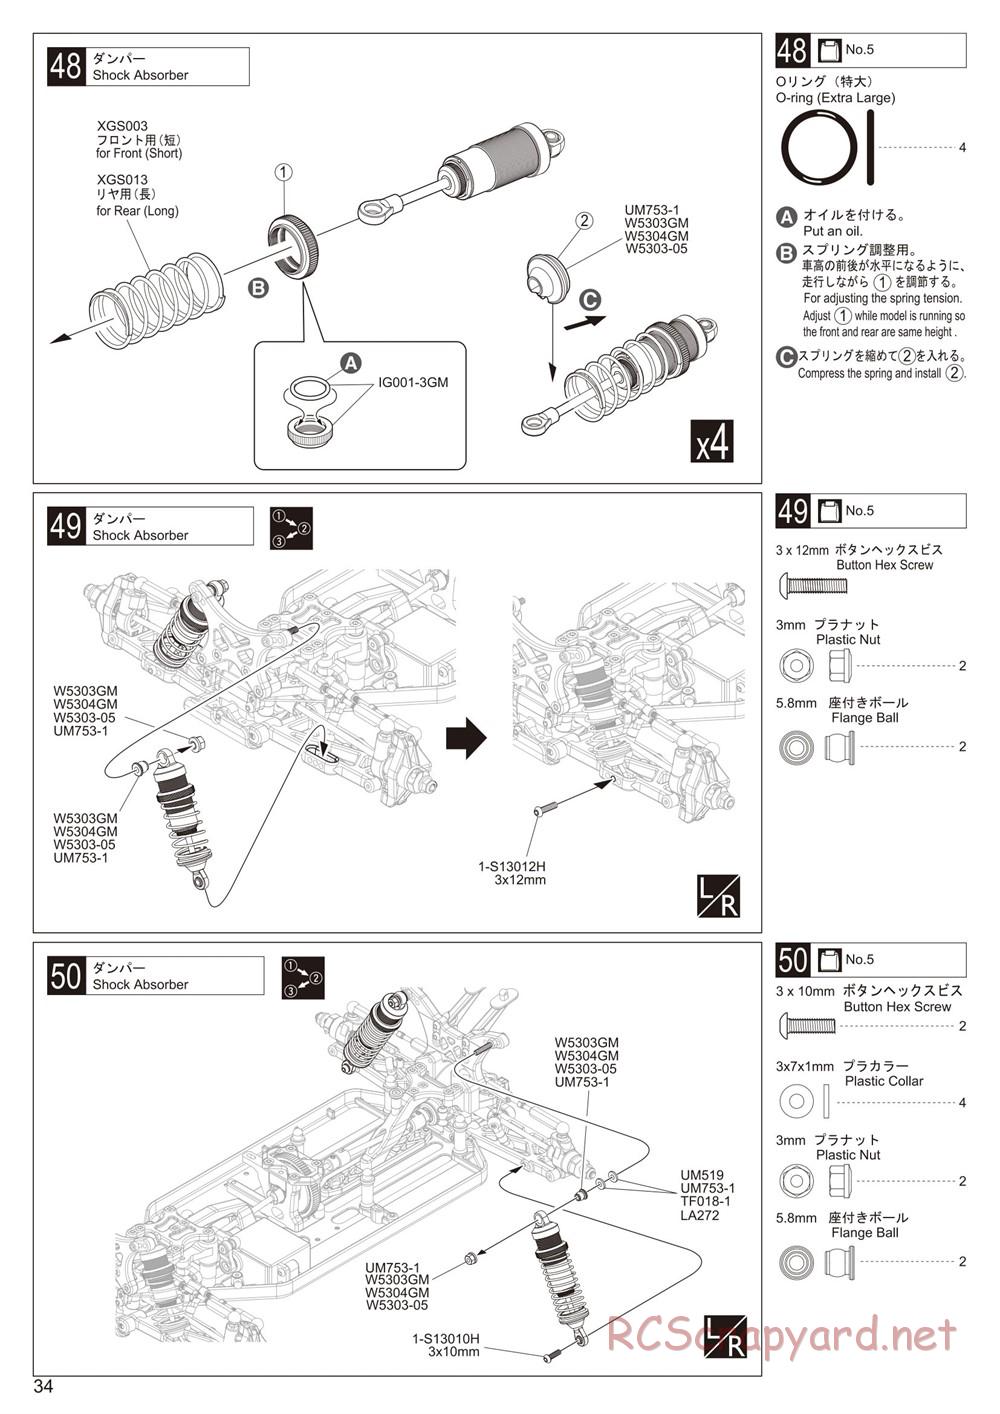 Kyosho - Lazer ZX-6 - Manual - Page 34